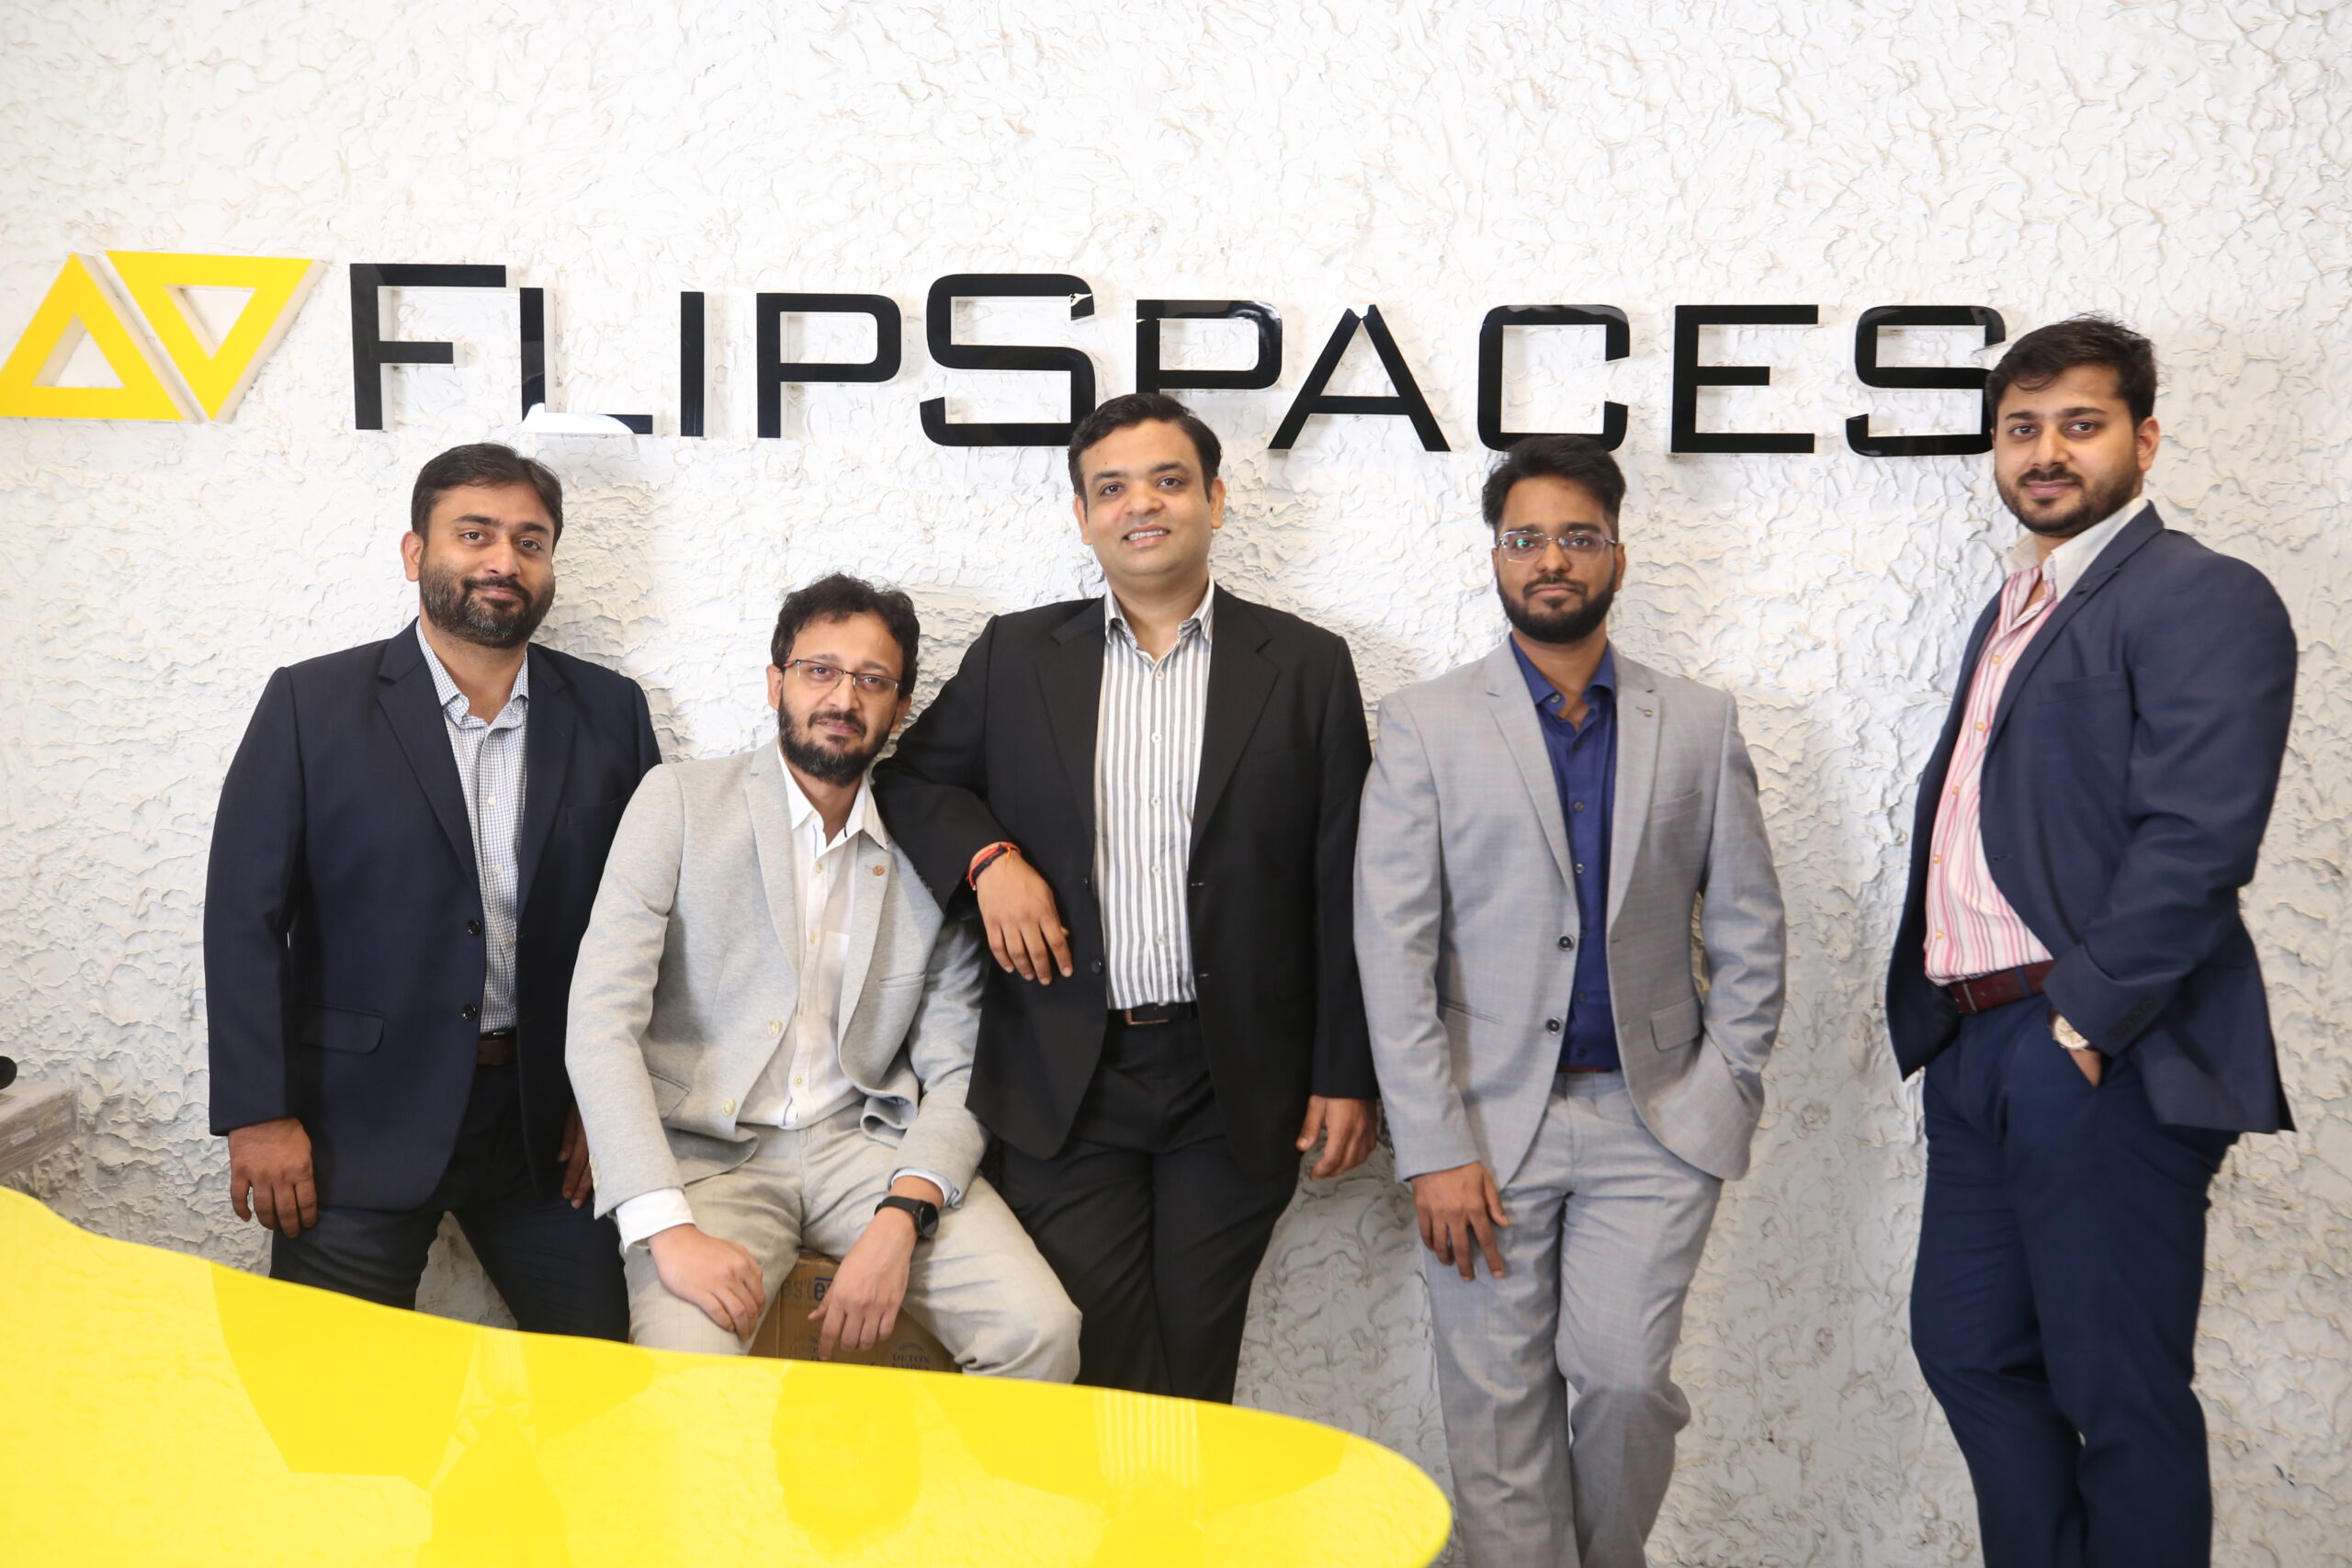 Mumbai's Interior Design Startup Secures $4 Million in Pre-Series B Funding Round, Led by Former IIFL AMC CEO Prashasta Seth